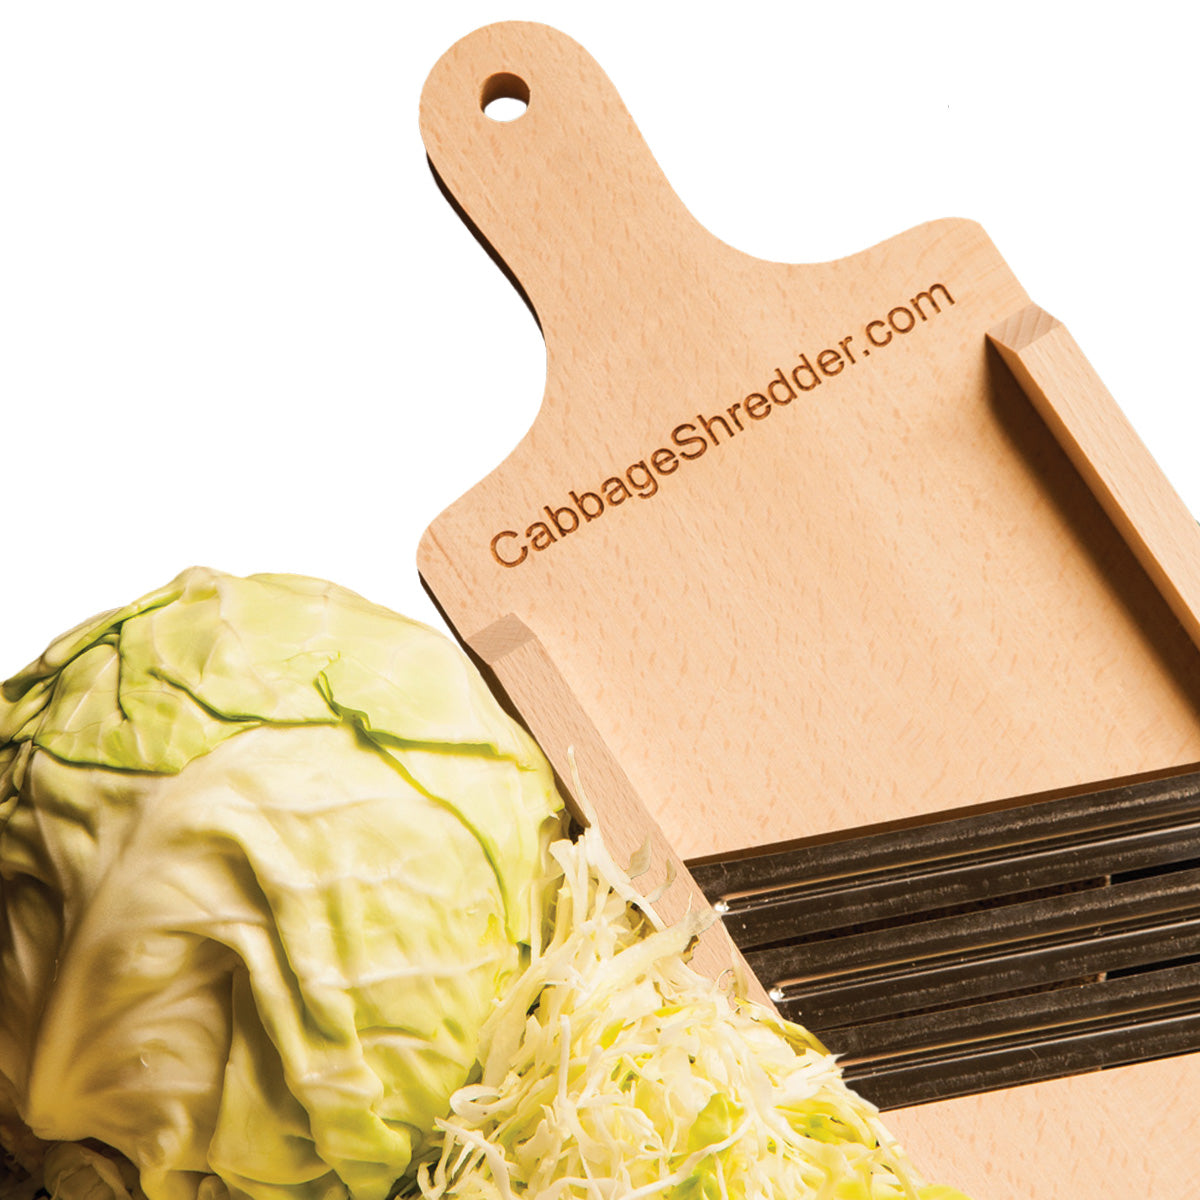 Wooden Cabbage Sauerkraut Vegetable Shredder Slicers - Made in